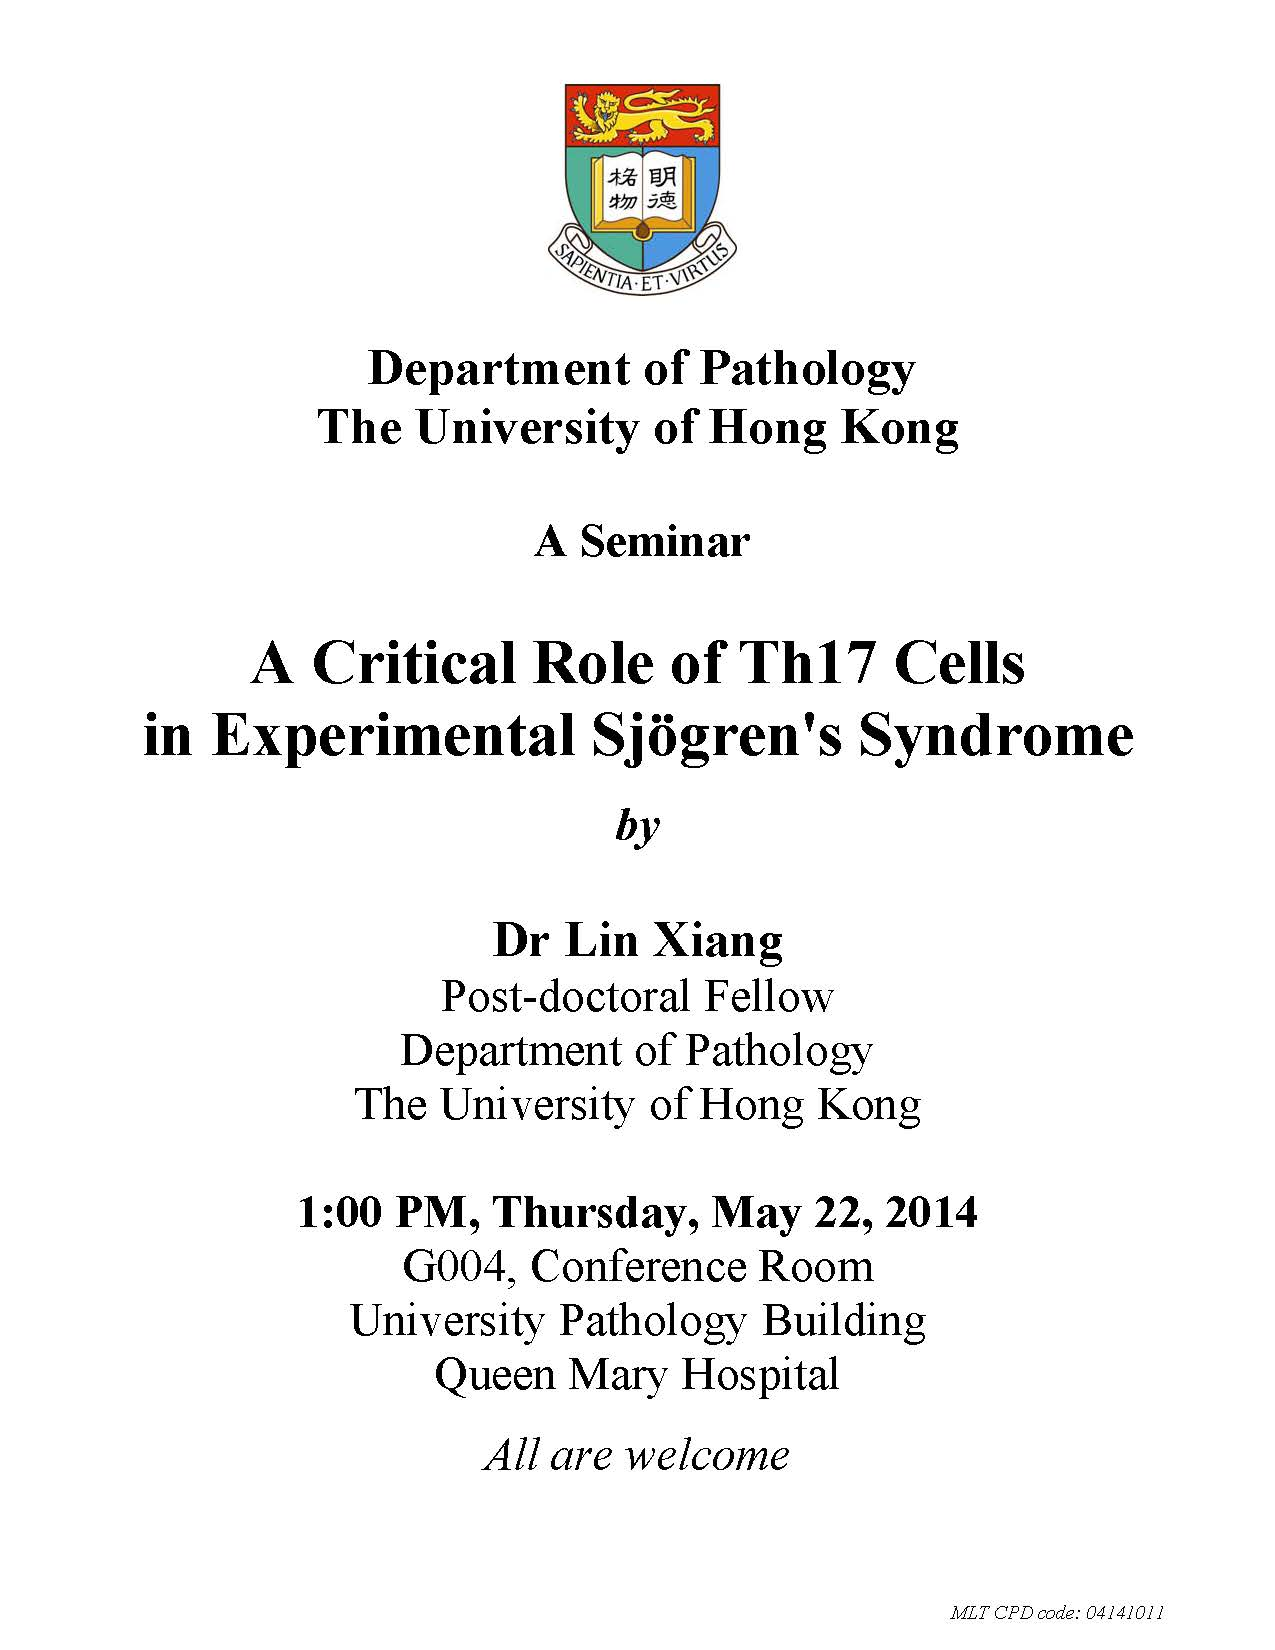 A Seminar - A Critical Role of Th17 Cells in Experimental Sjögren's Syndro